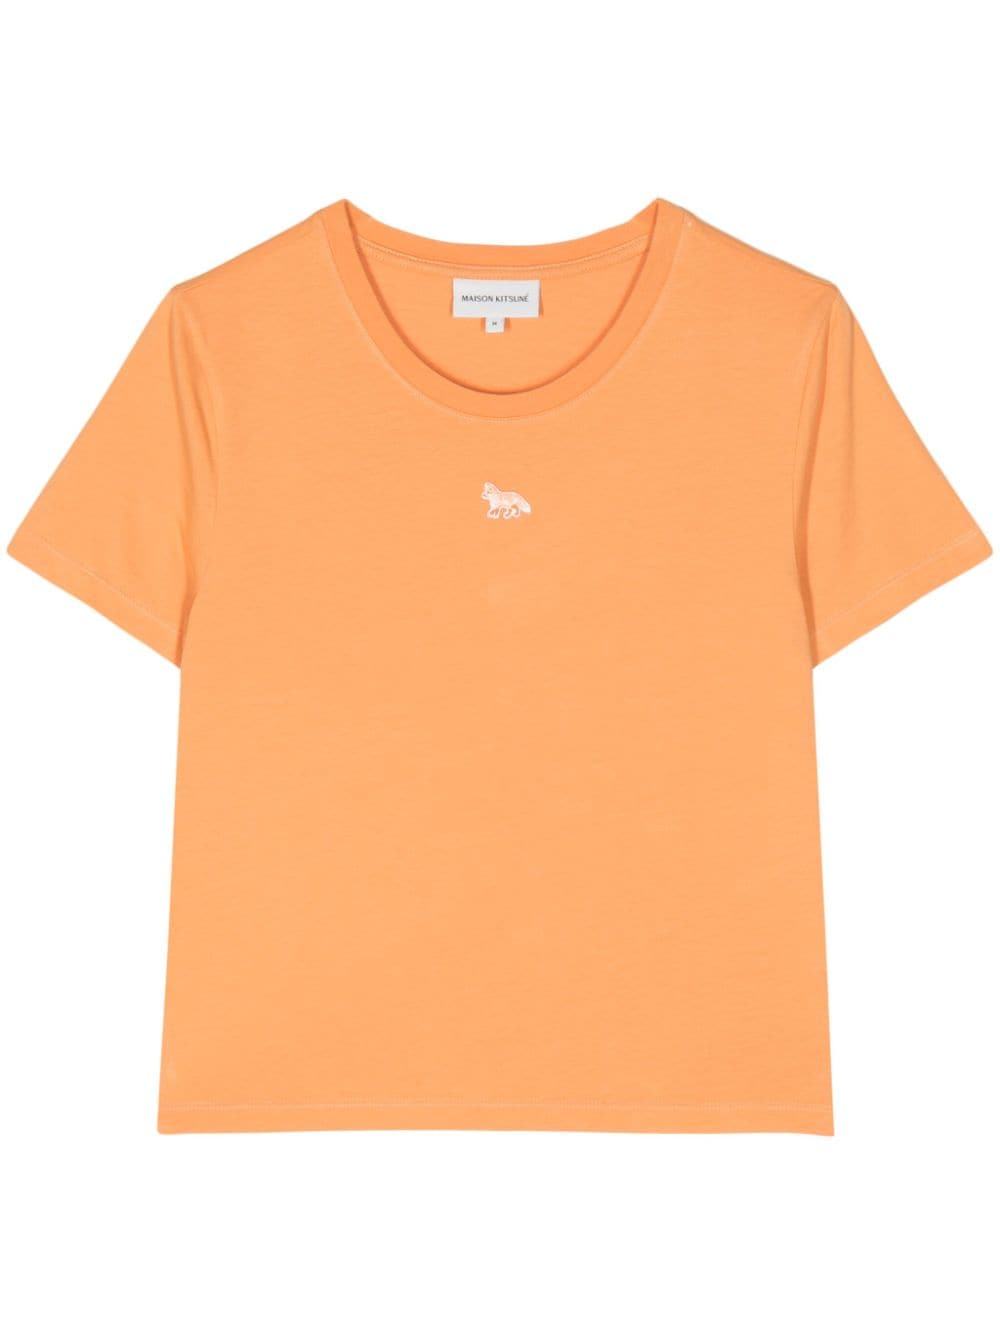 Maison Kitsuné Baby Fox cotton T-shirt - Orange von Maison Kitsuné